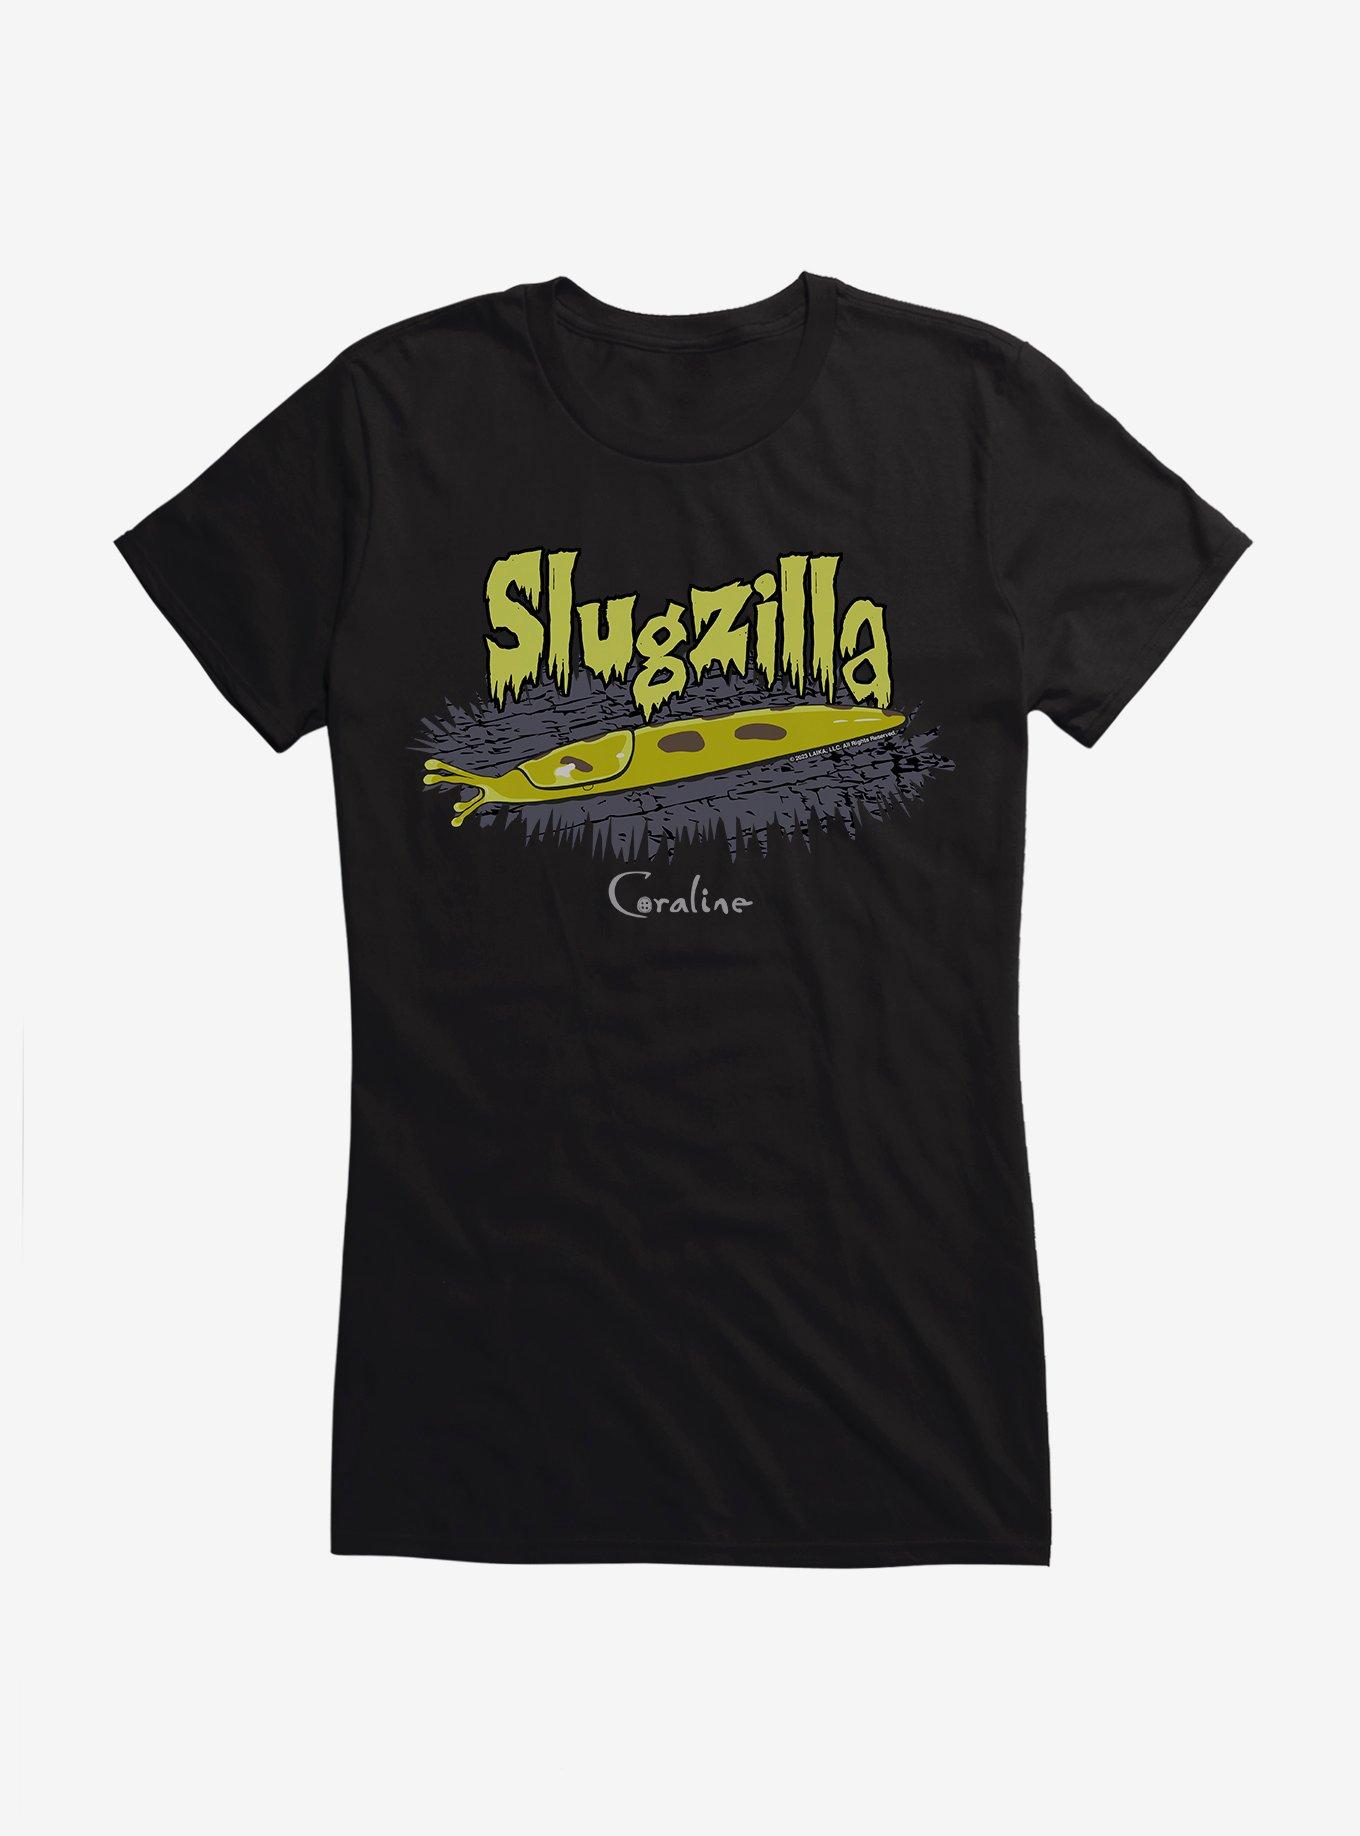 Coraline Slugzilla Girls T-Shirt